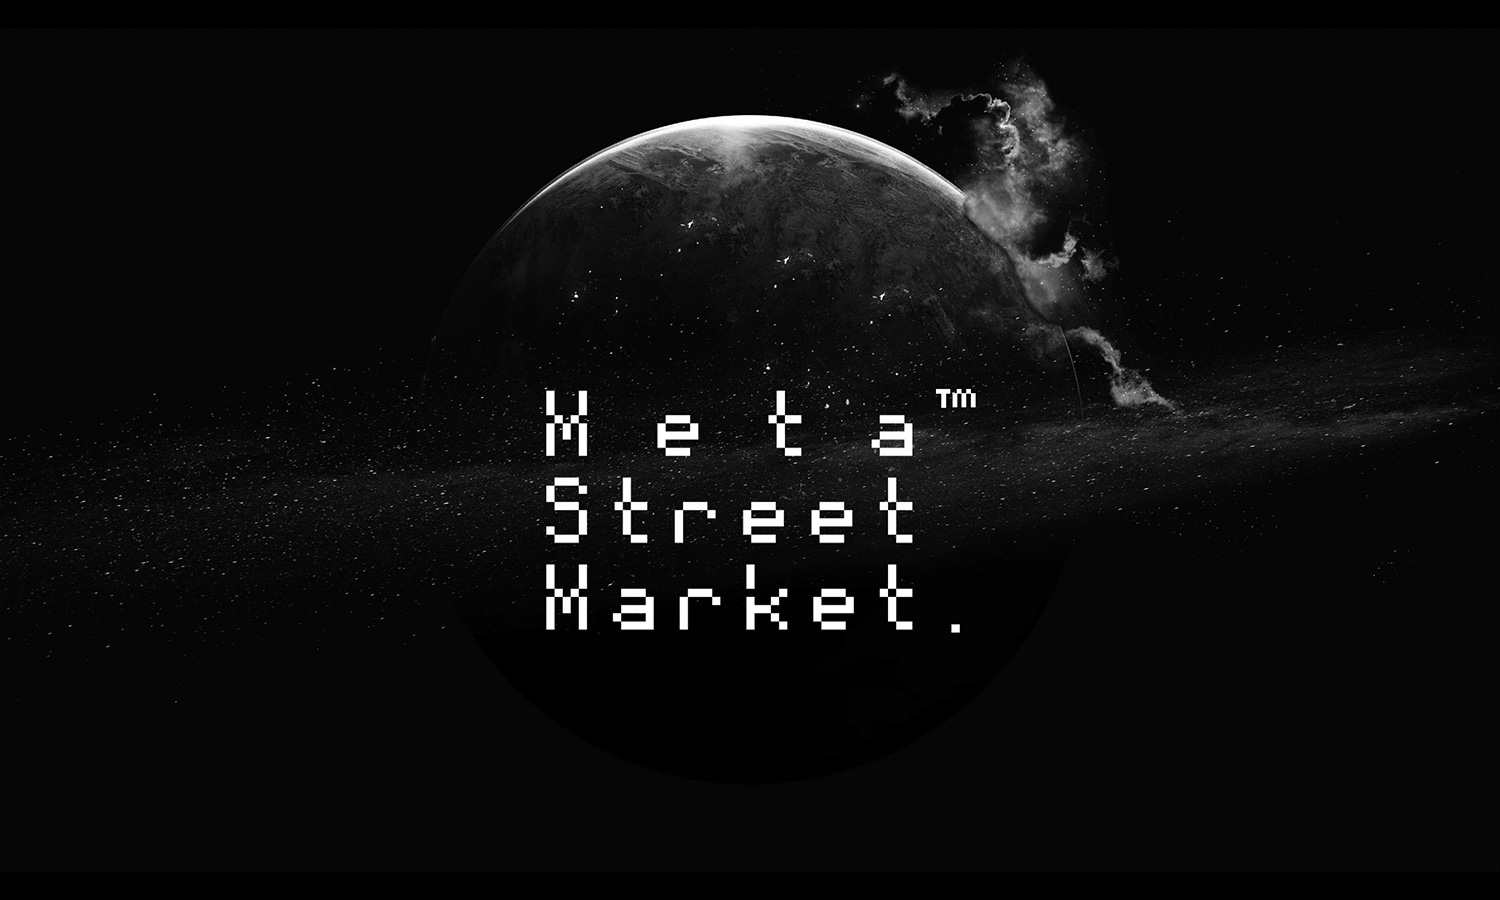 Meta Street Market 登陆上海潮博会